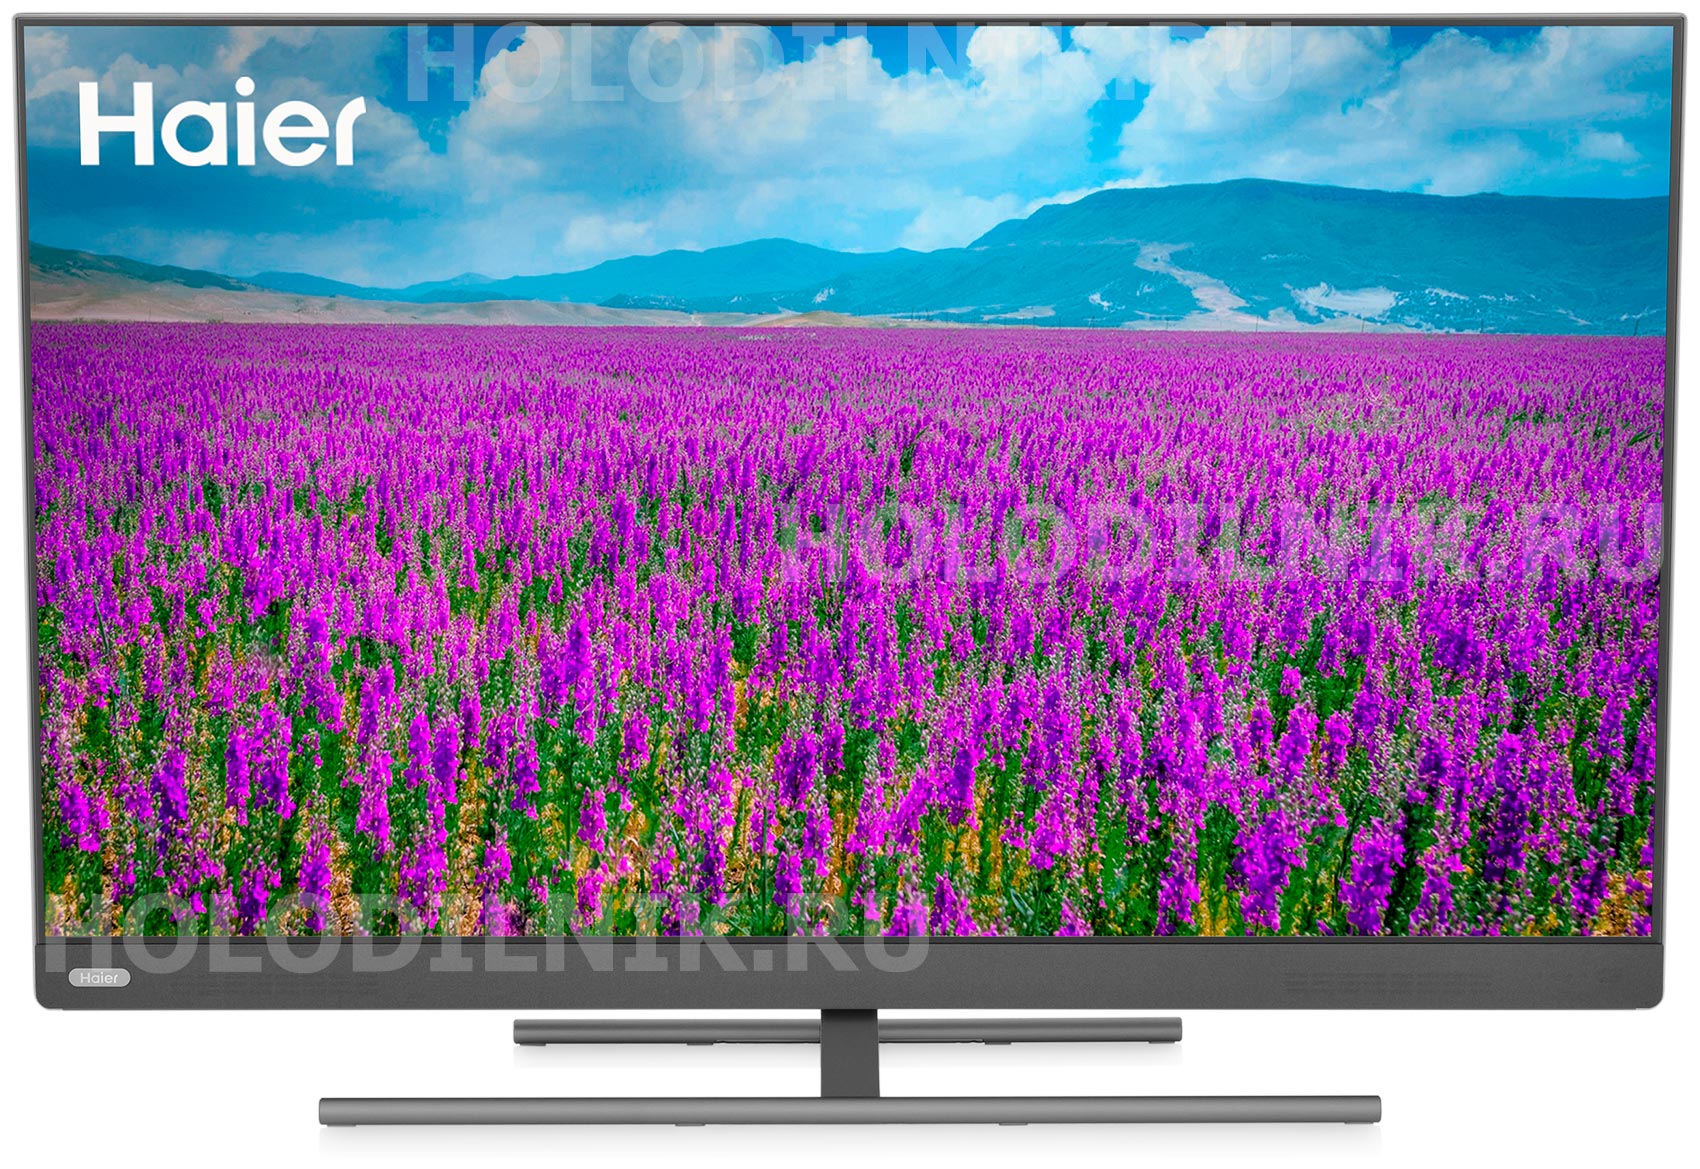  Haier 50 Smart TV AX Pro